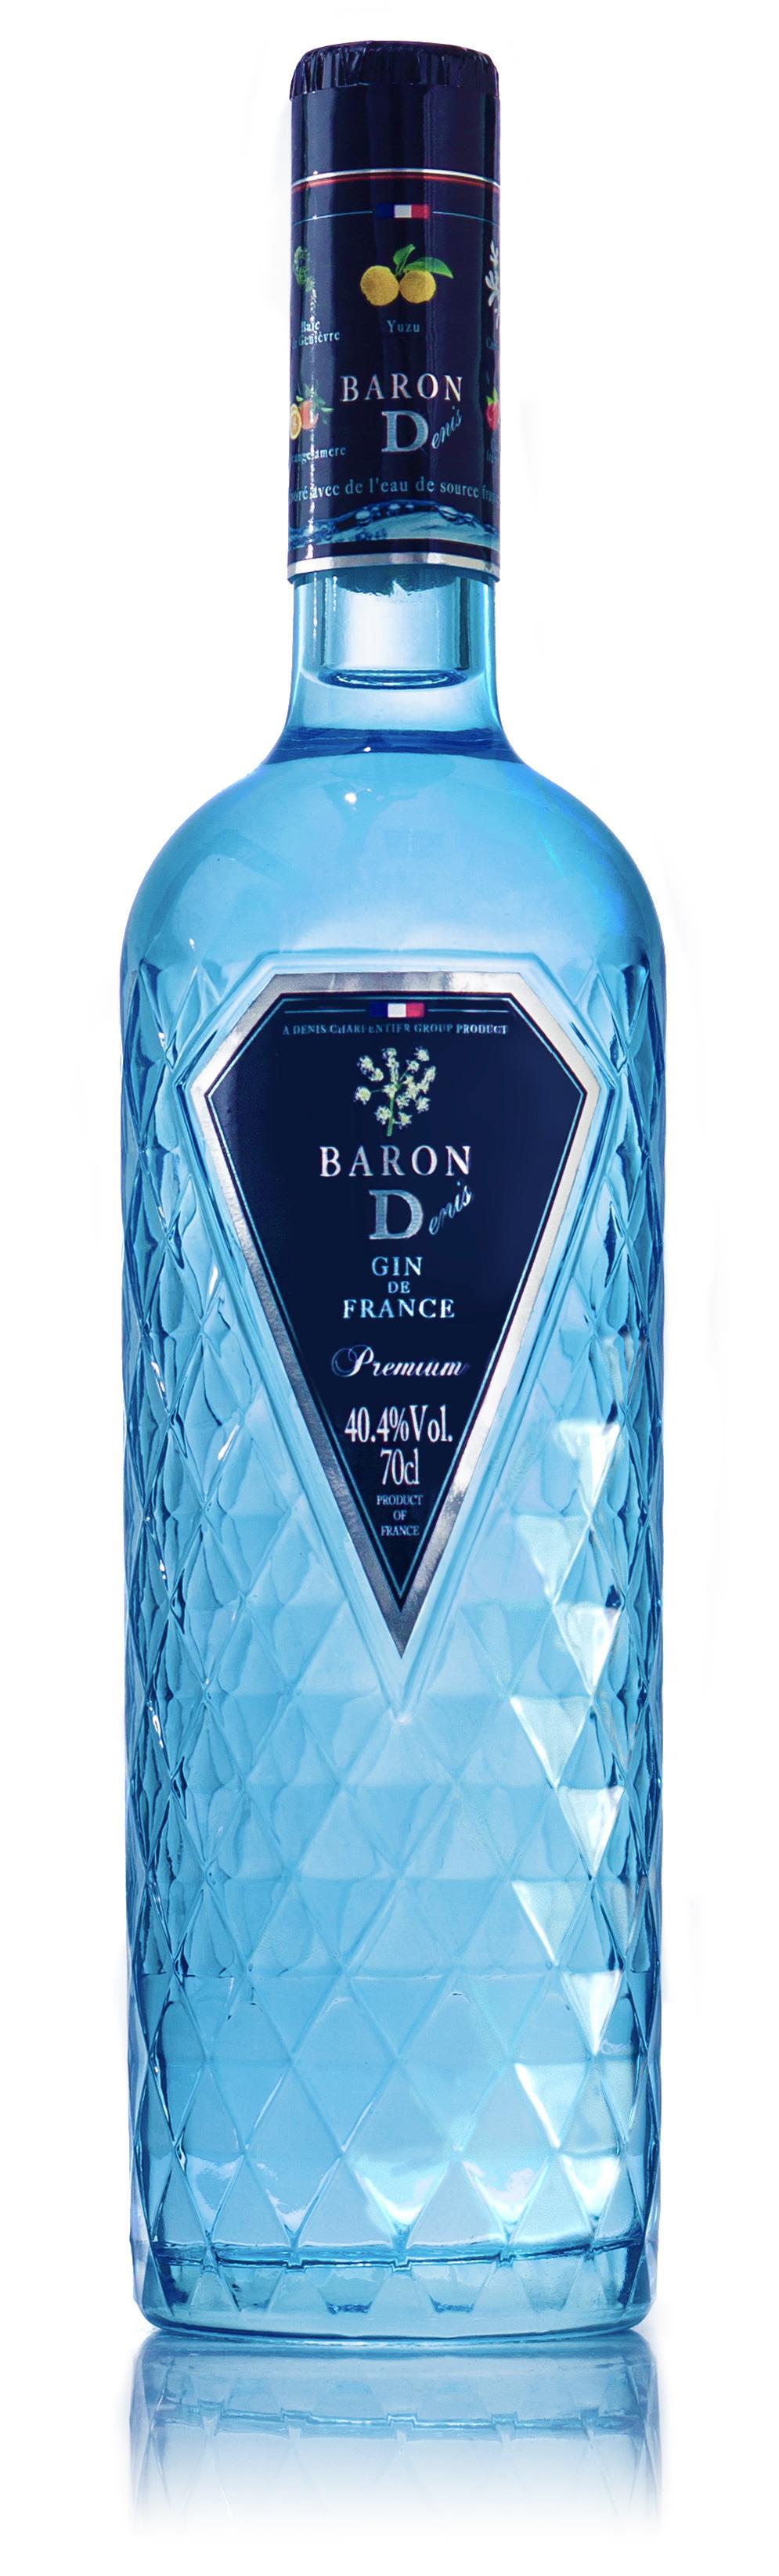 Se Gin - Baron D Gin 40,4%, 70 cl. hos Falkensten Vin